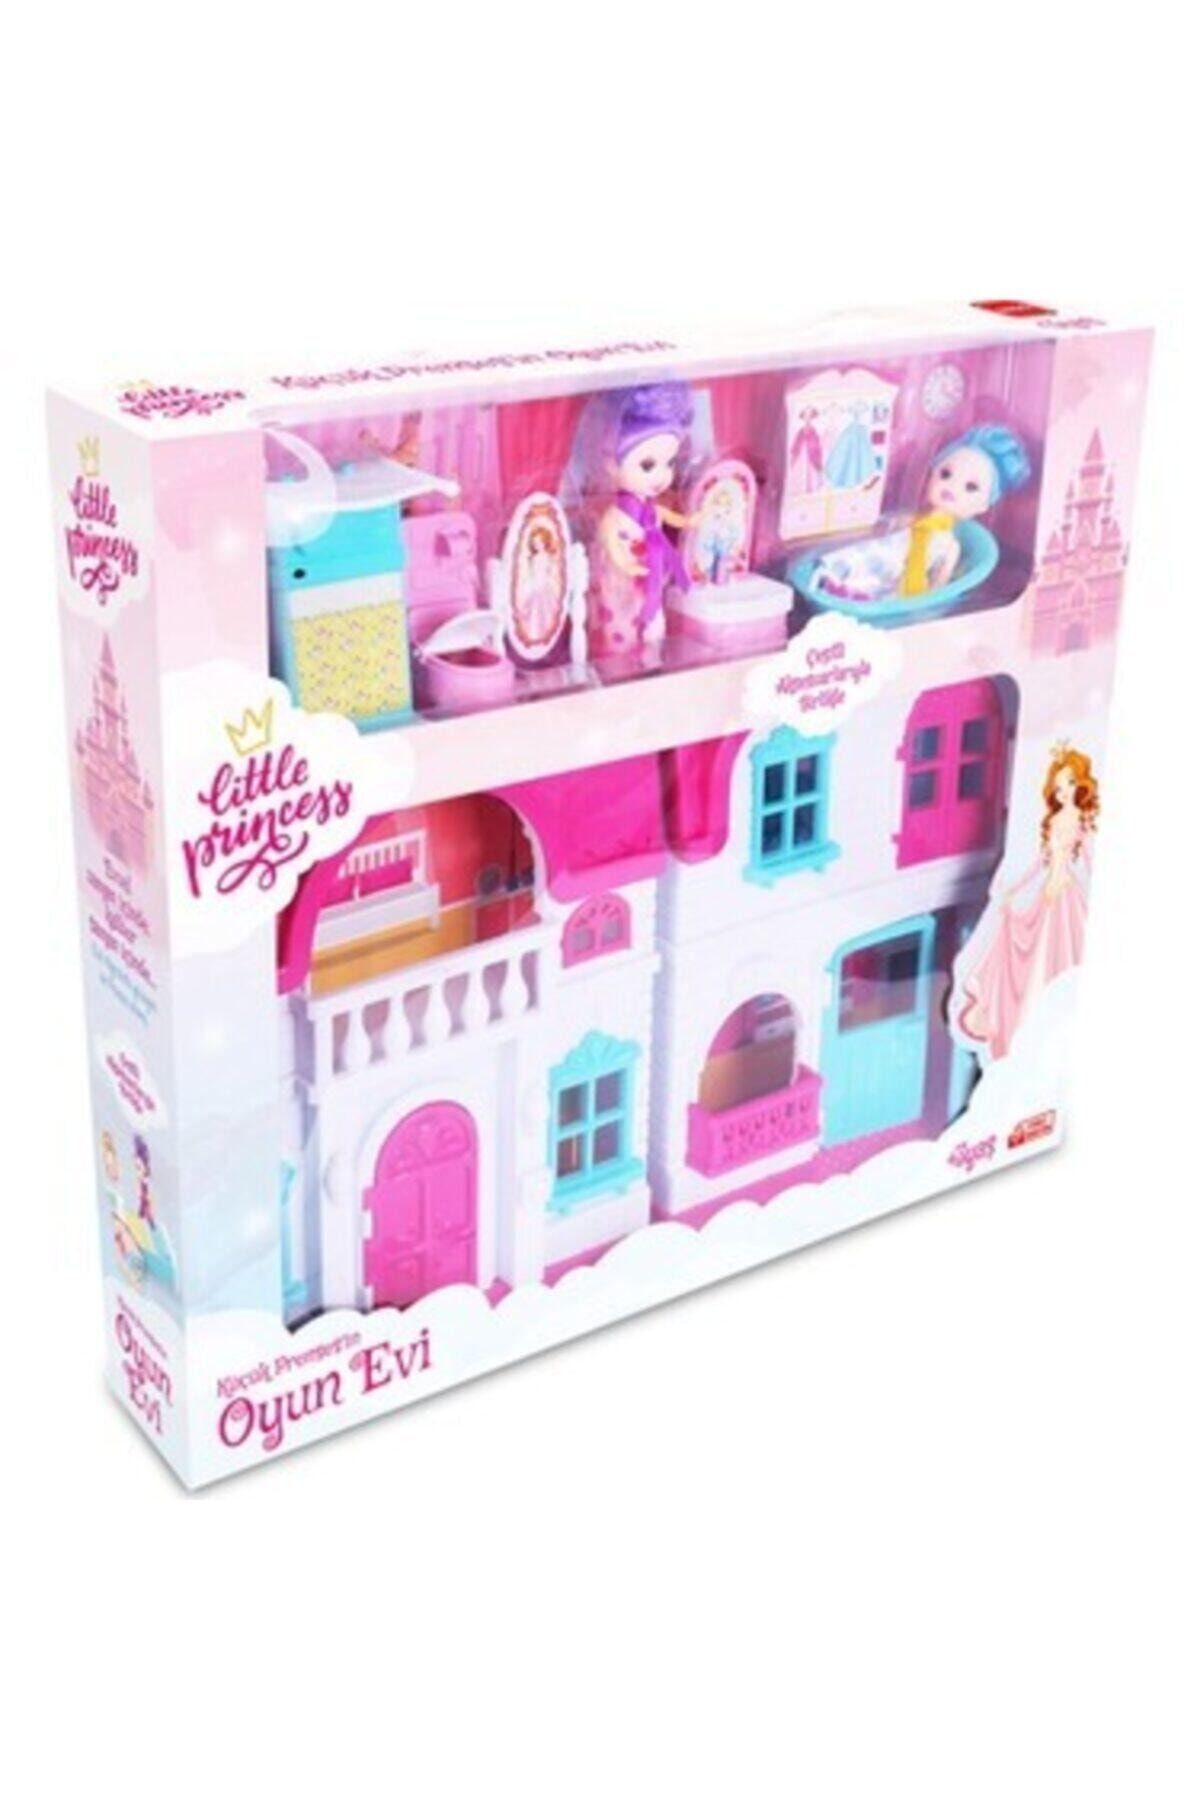 mgs oyuncak little princess oyun evi mgs 3127 fiyati yorumlari trendyol